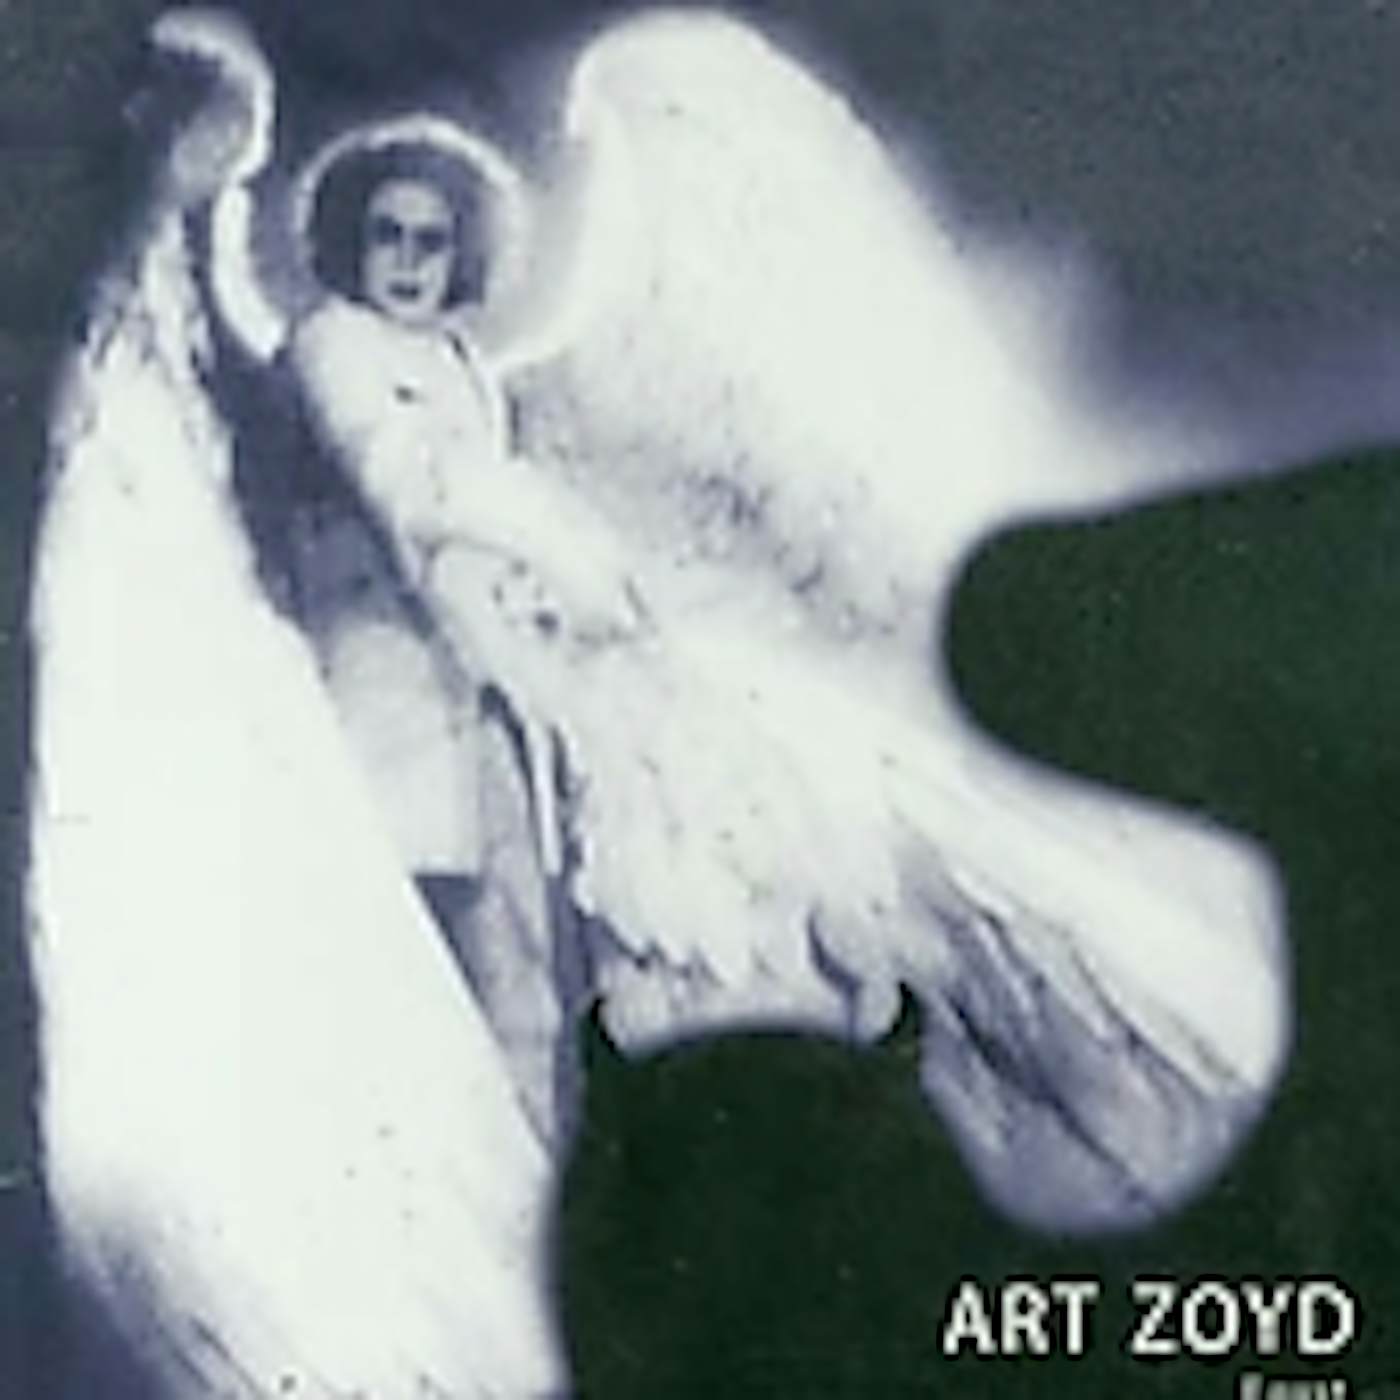 Art Zoyd FAUST CD